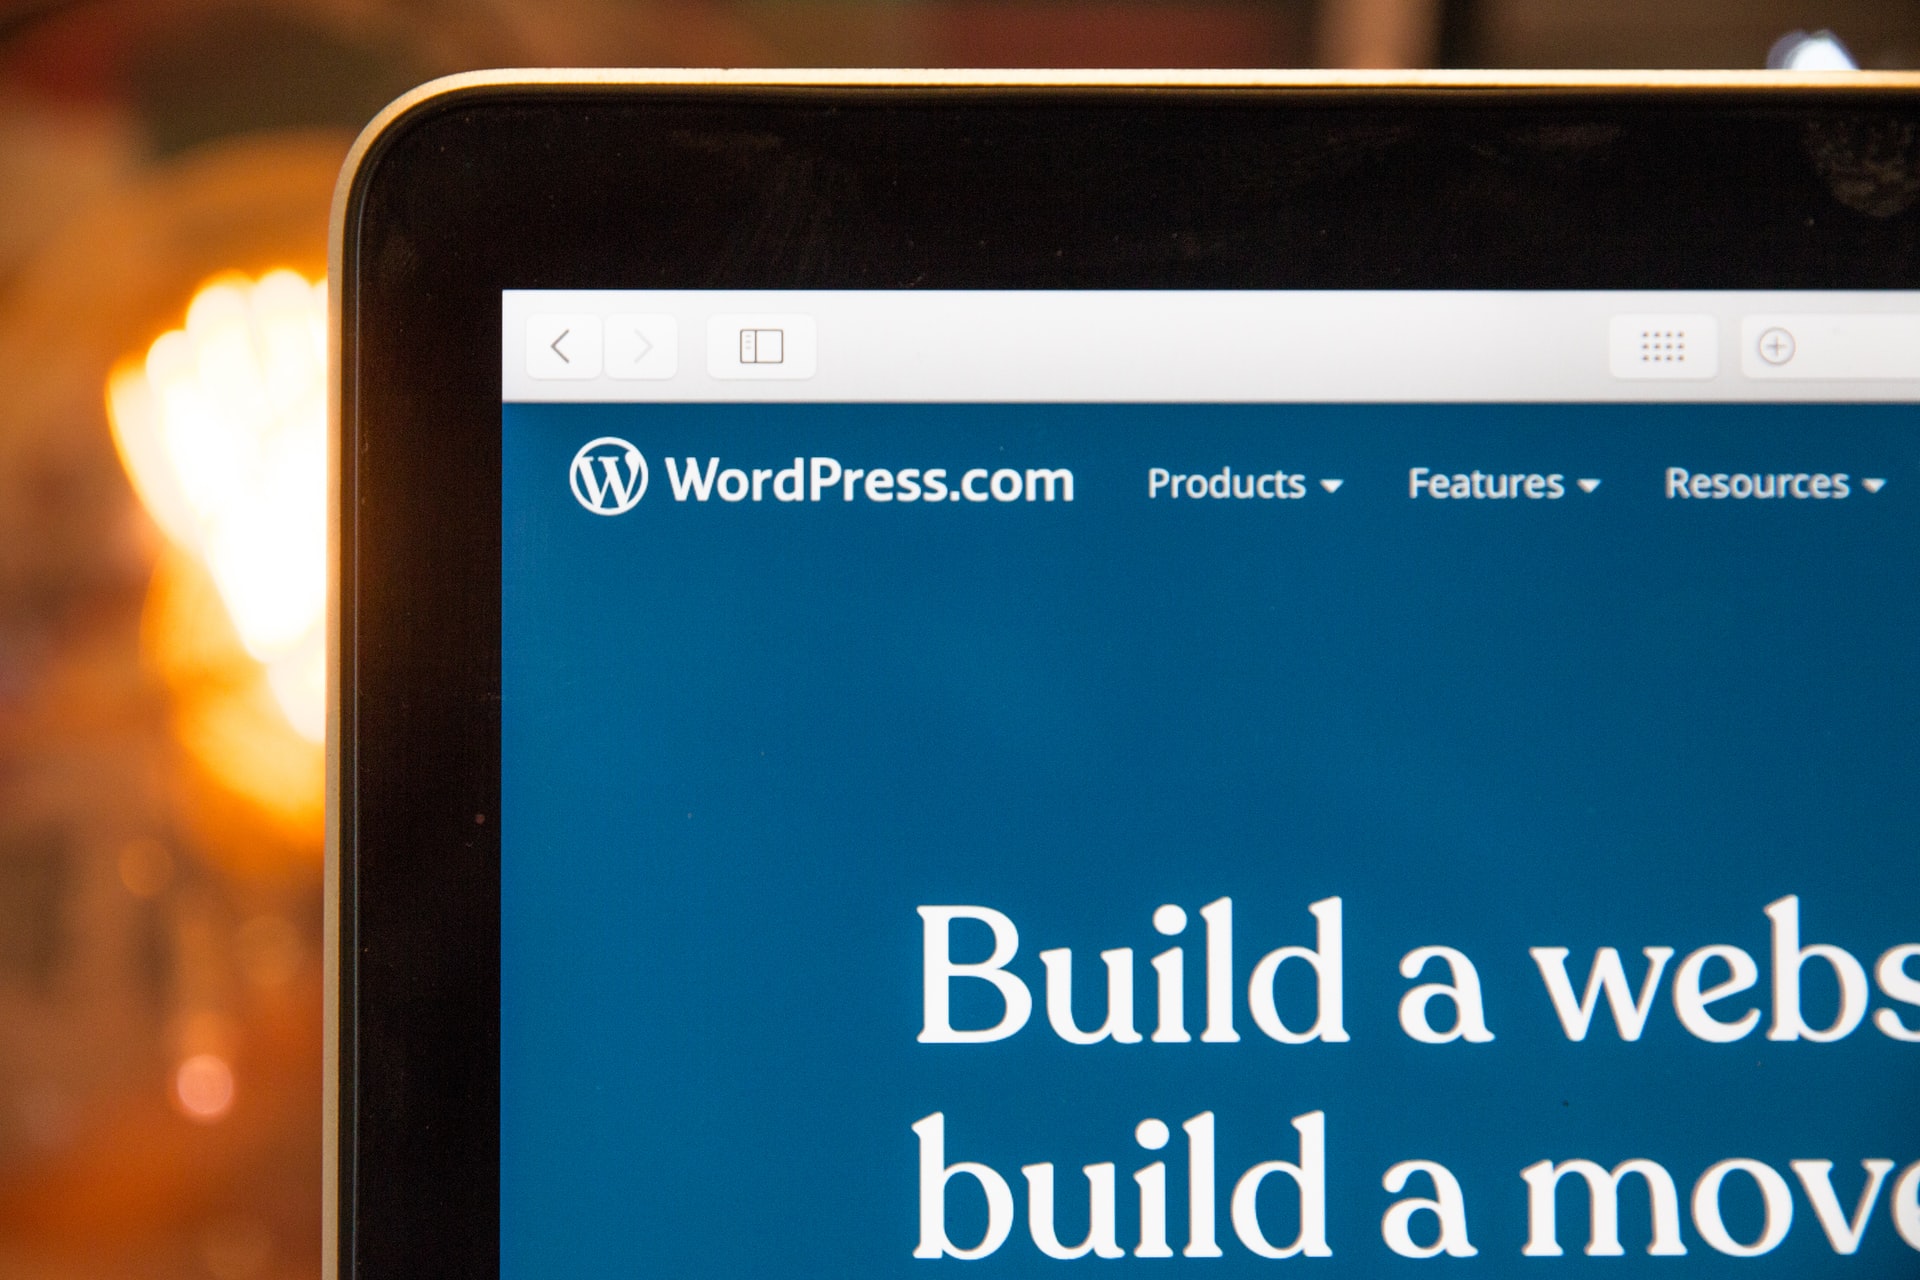 Upper left corner part of WordPress.com homepage as seen on a laptop screen